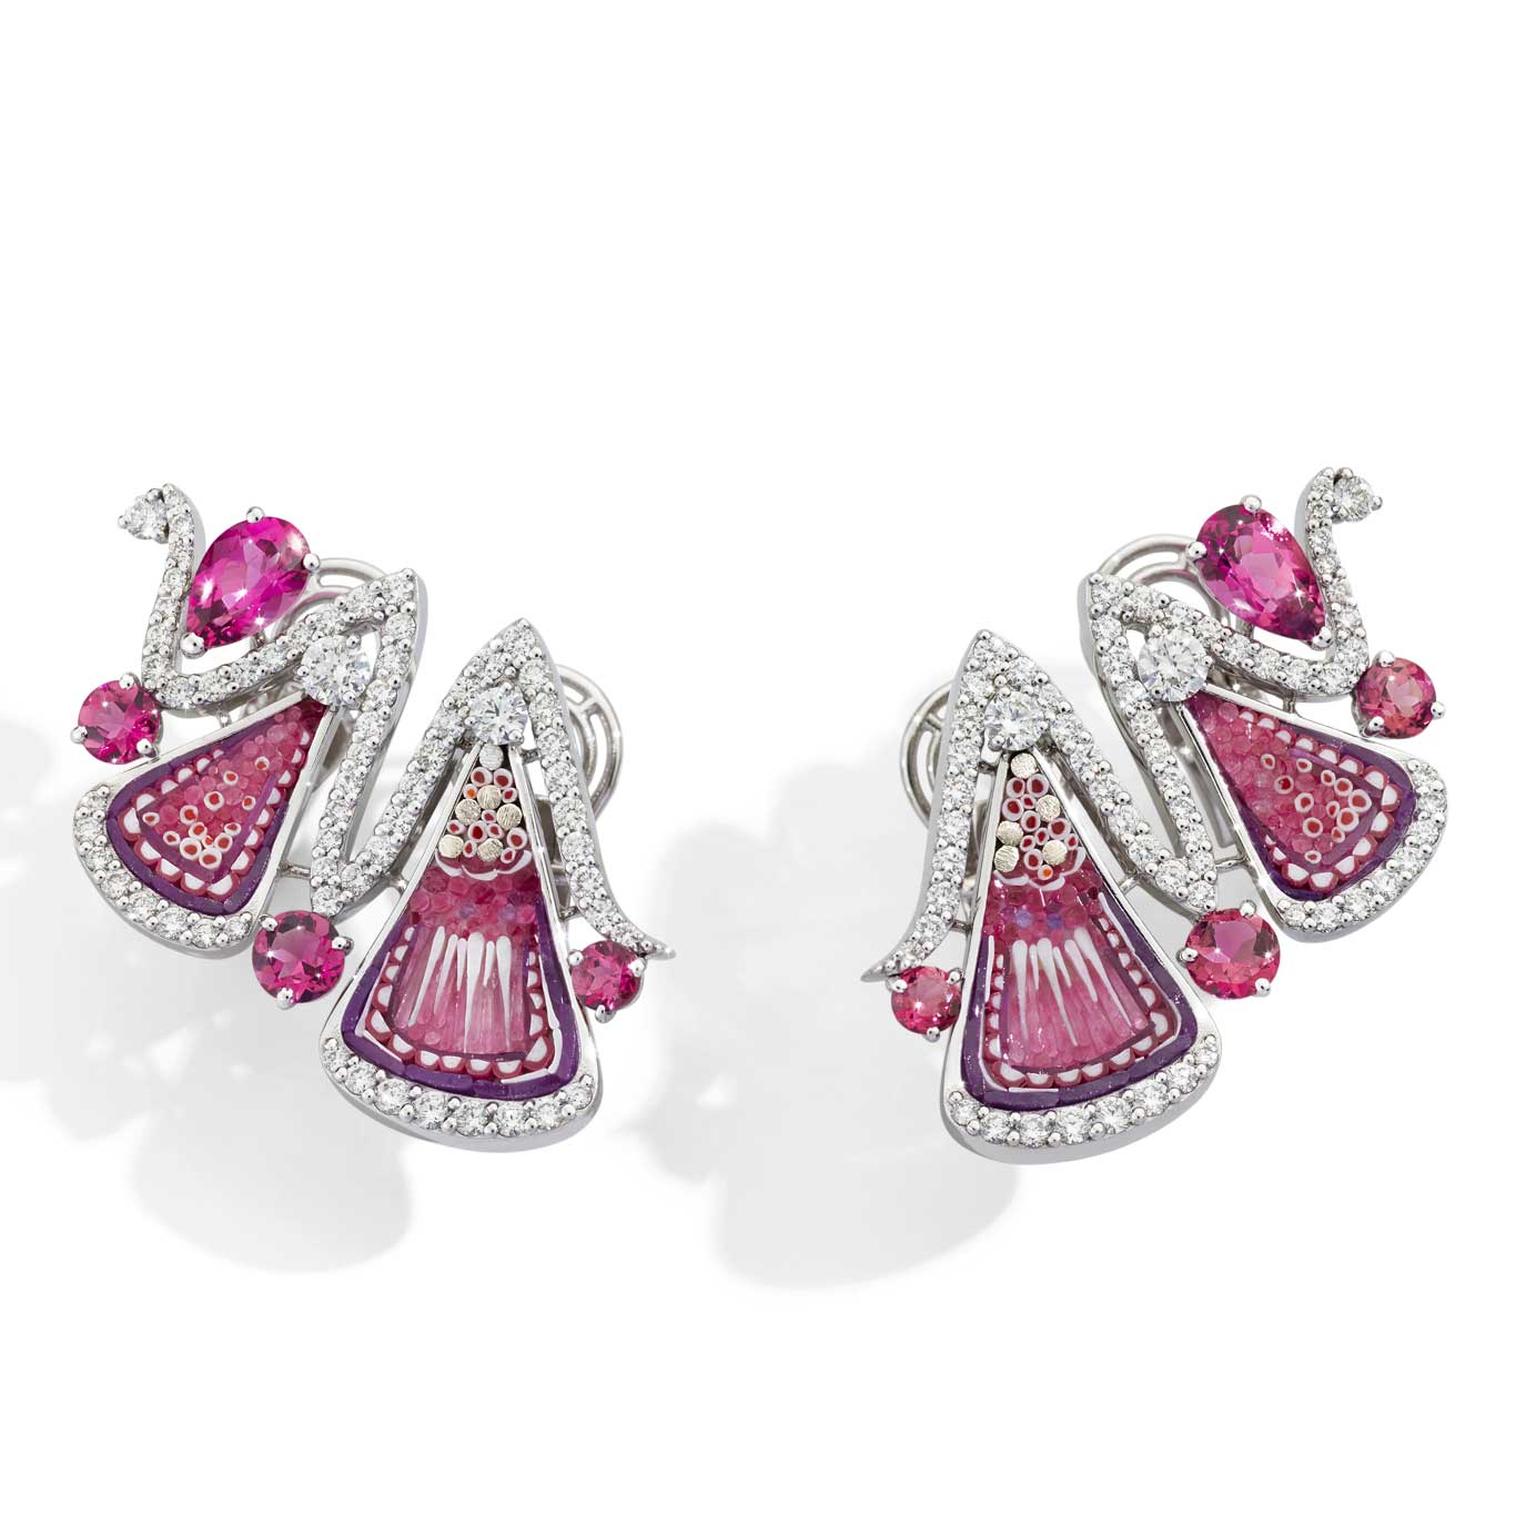 Sicis Incanto pink earrings 